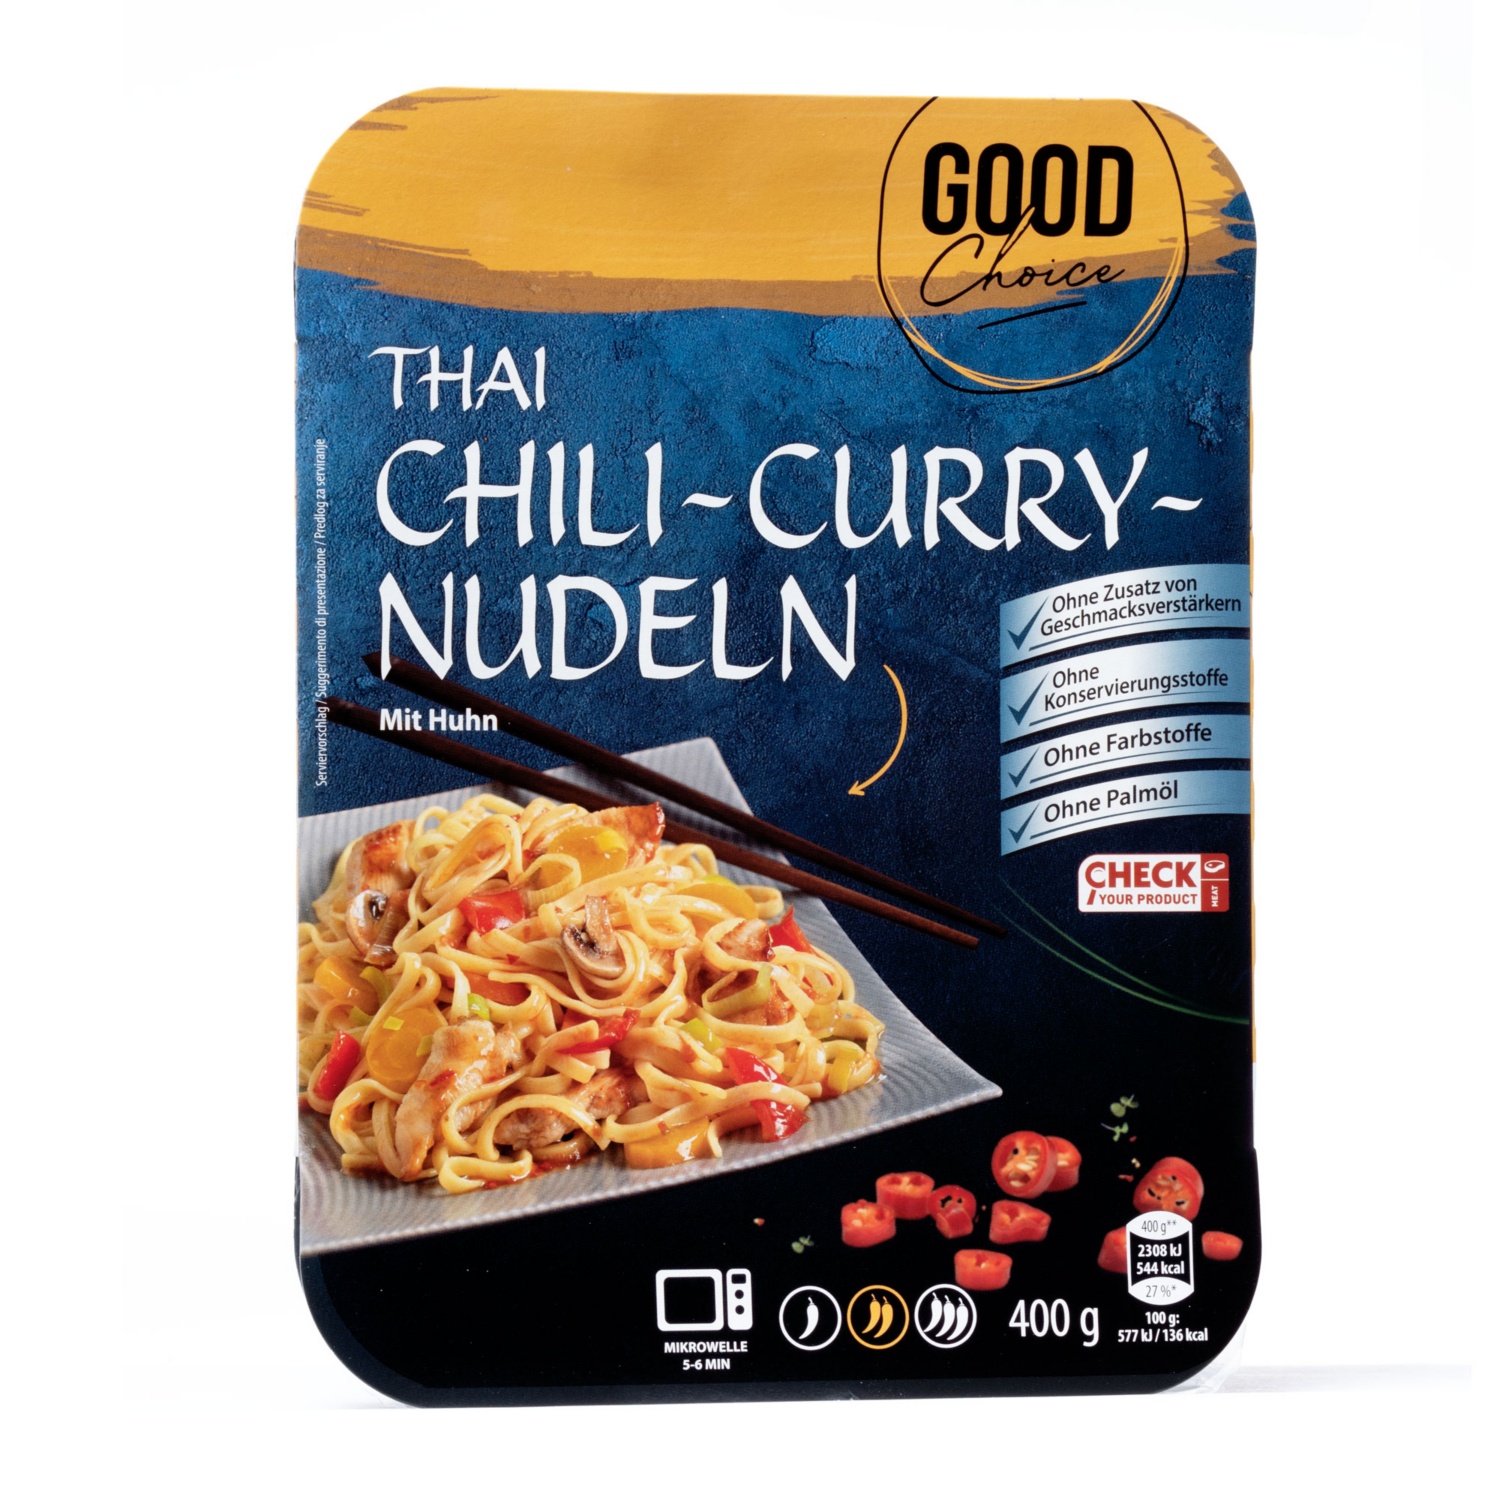 GOOD CHOICE Asia Curry, Thai Nudeln